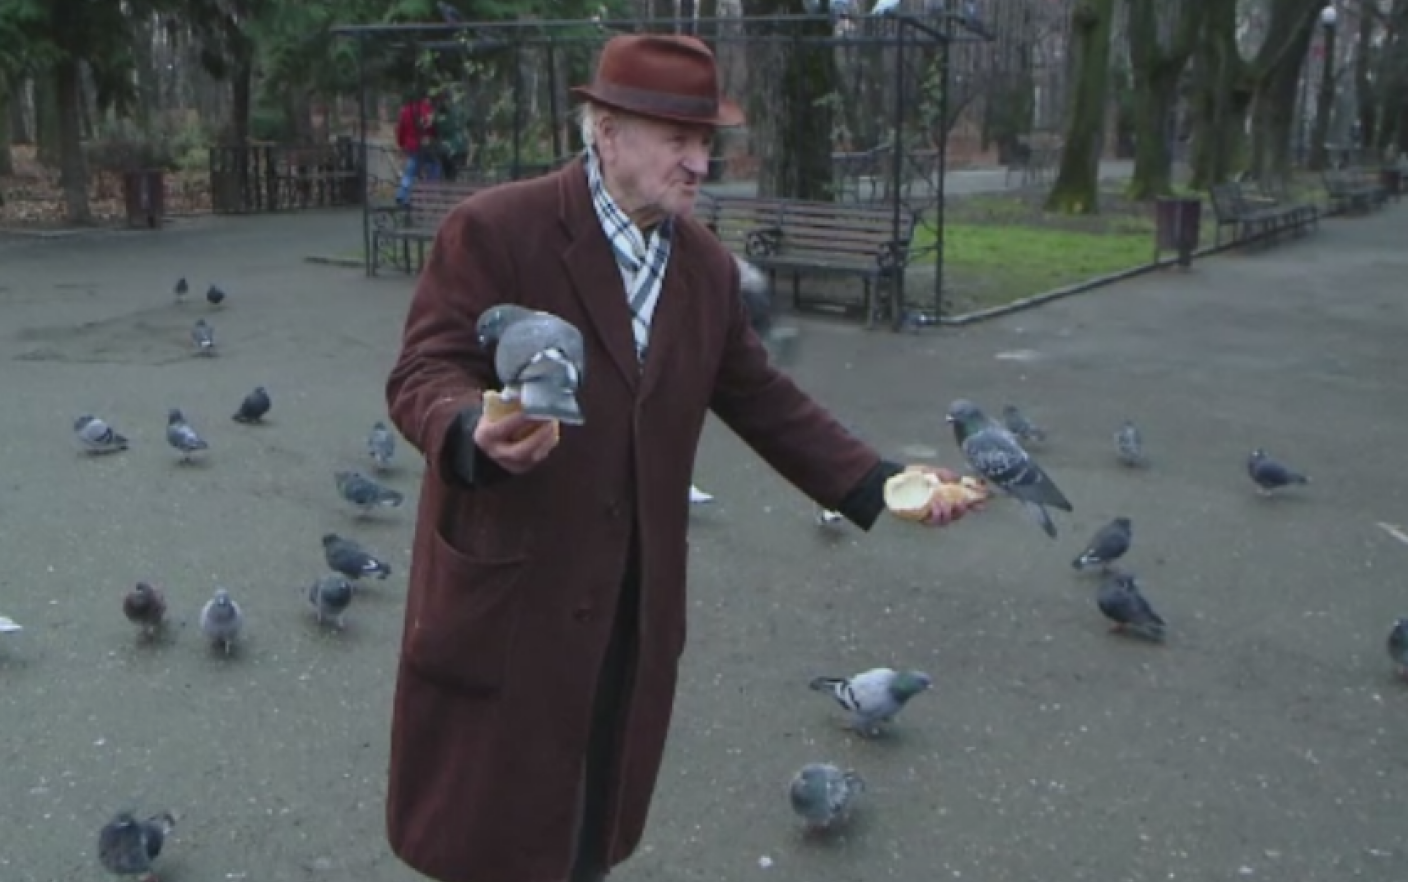 Democracy emergency Latin Desi are 92 de ani, merge zilnic in parc pentru a hrani porumbeii si sa  uite de probleme. "Cand e zapada, eu tot vin" - Stirileprotv.ro